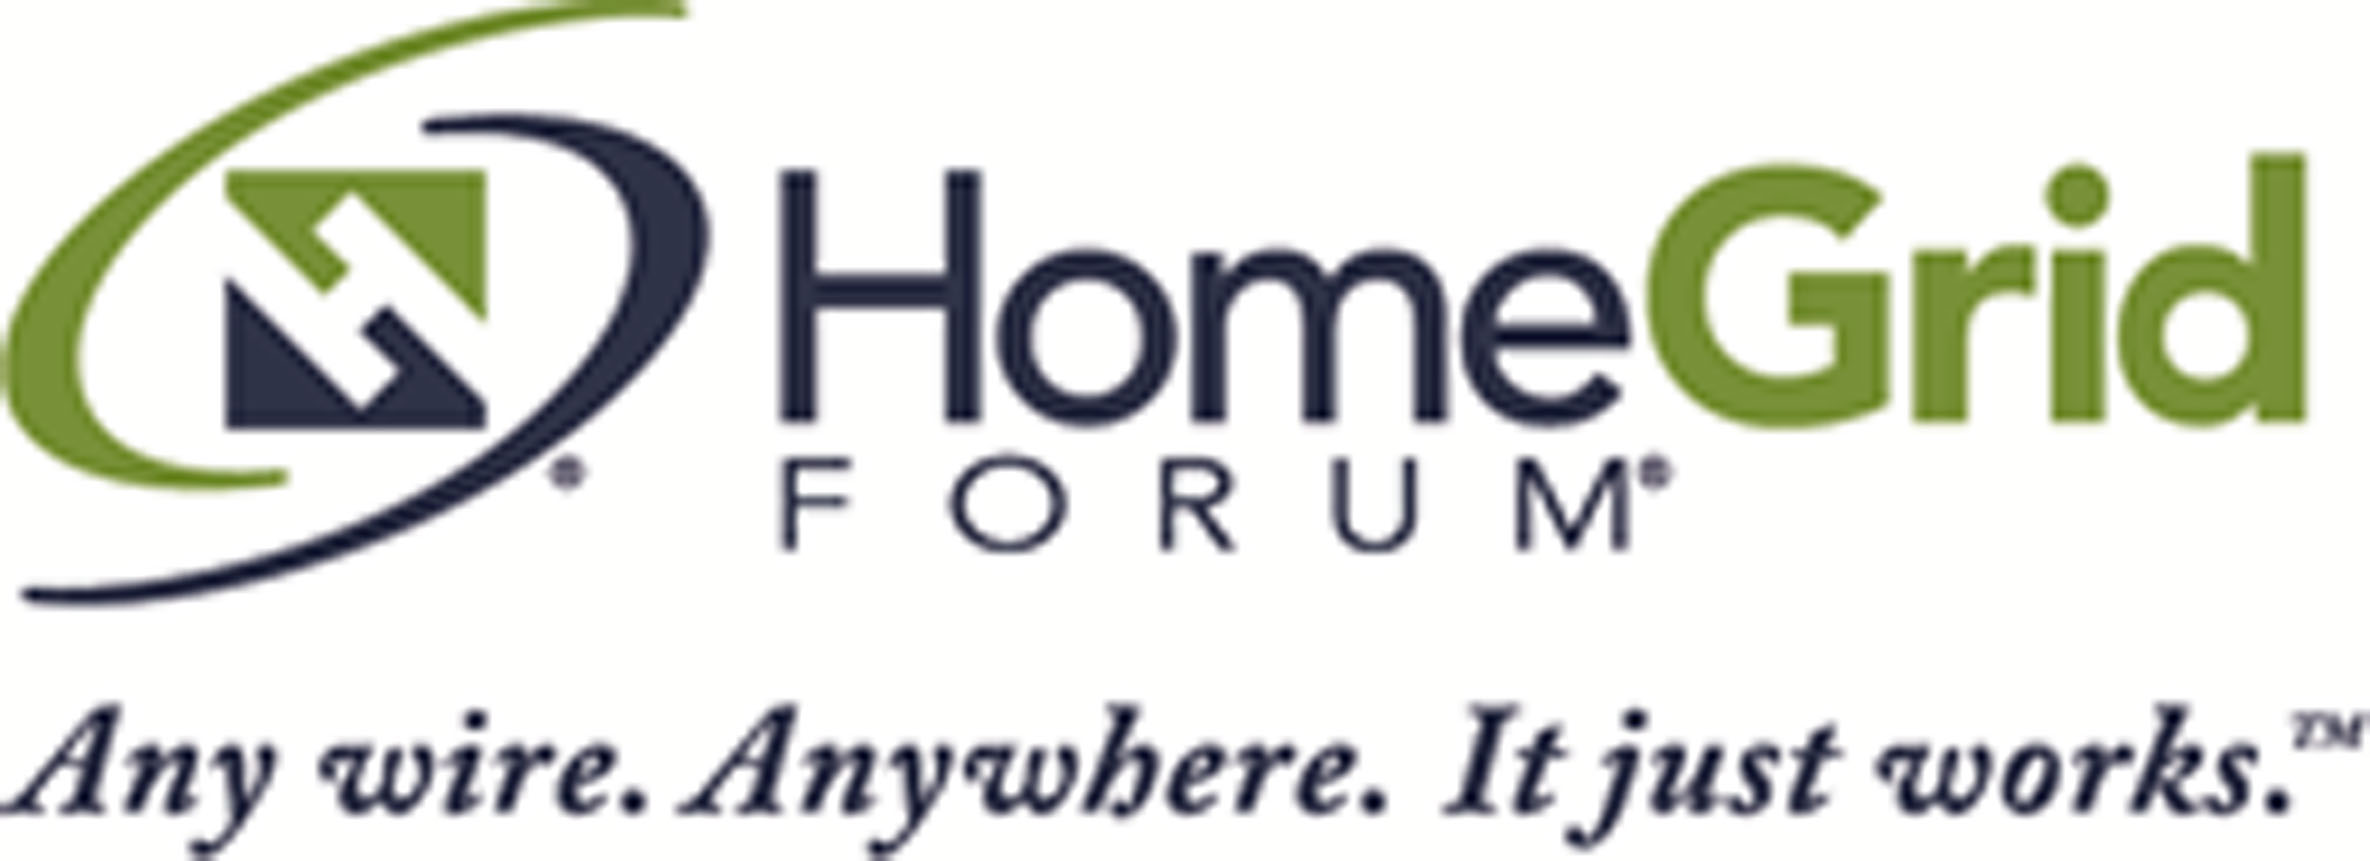 HomeGrid Forum (HGF)